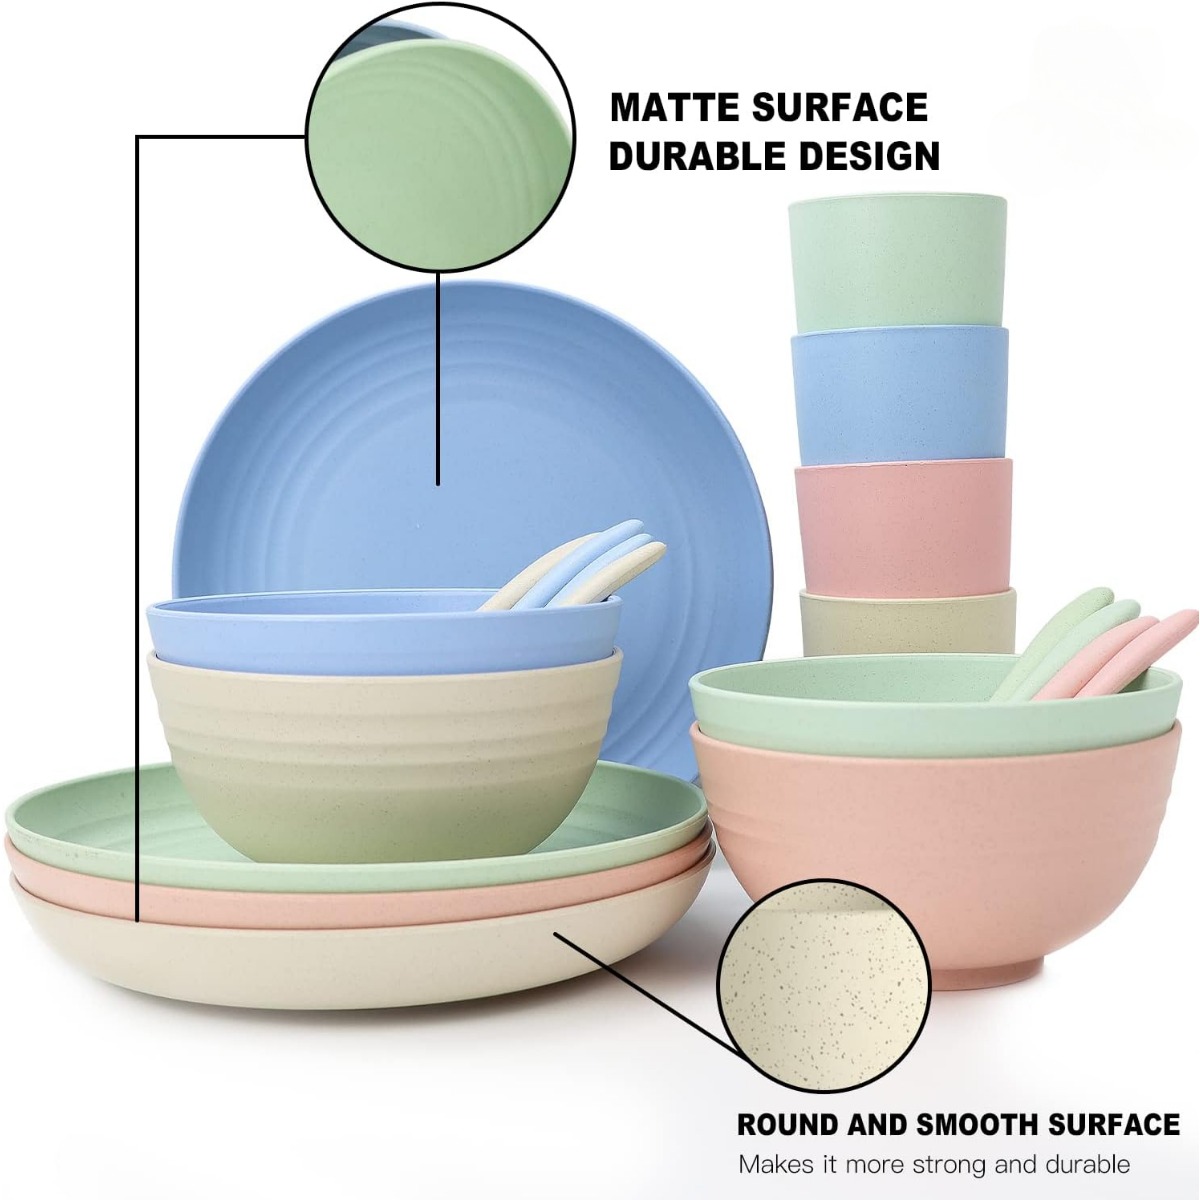 Round Dinnerware Bowl - Set of 2